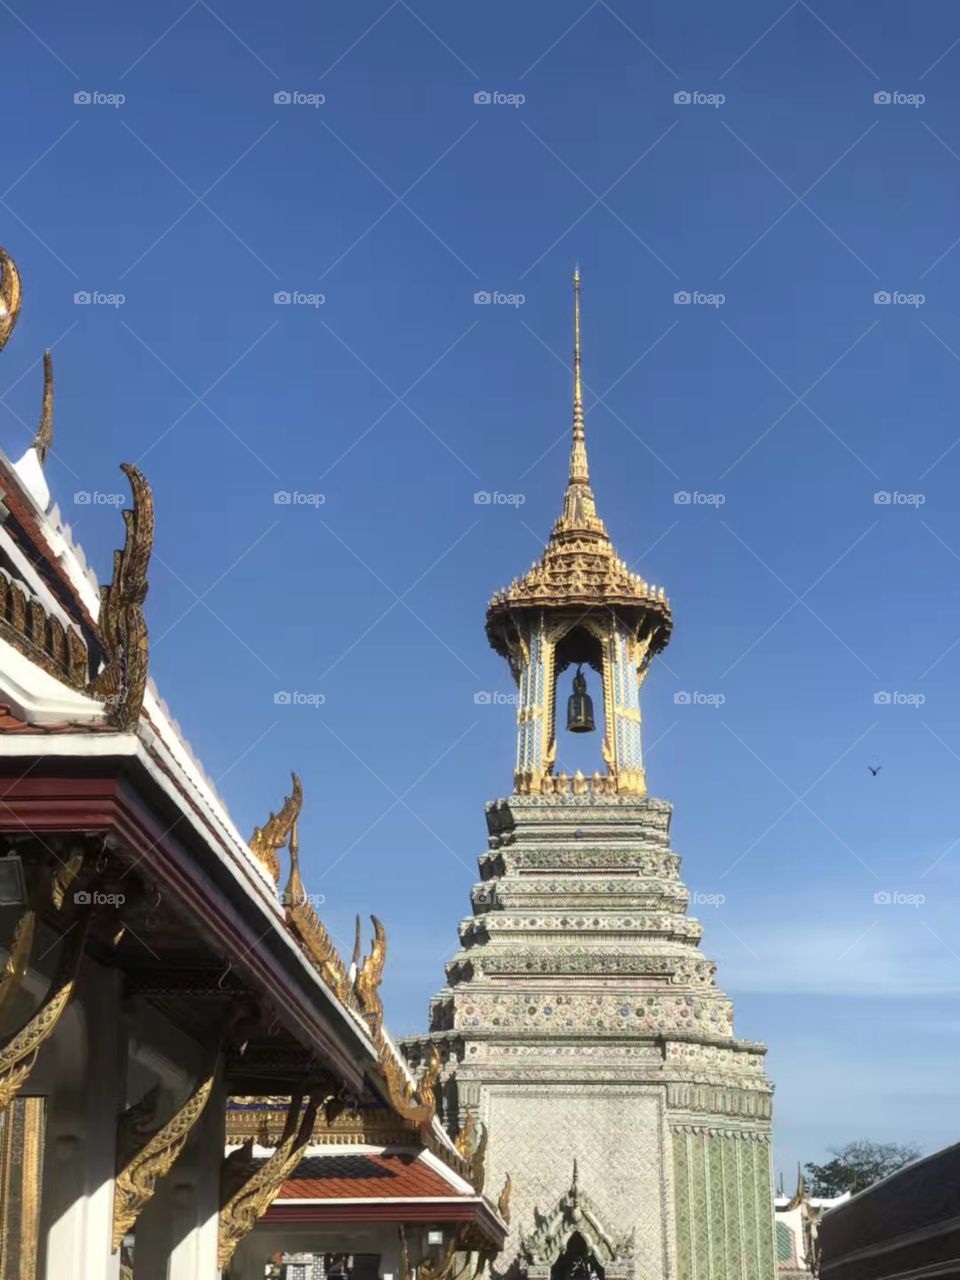 
pagoda
tower